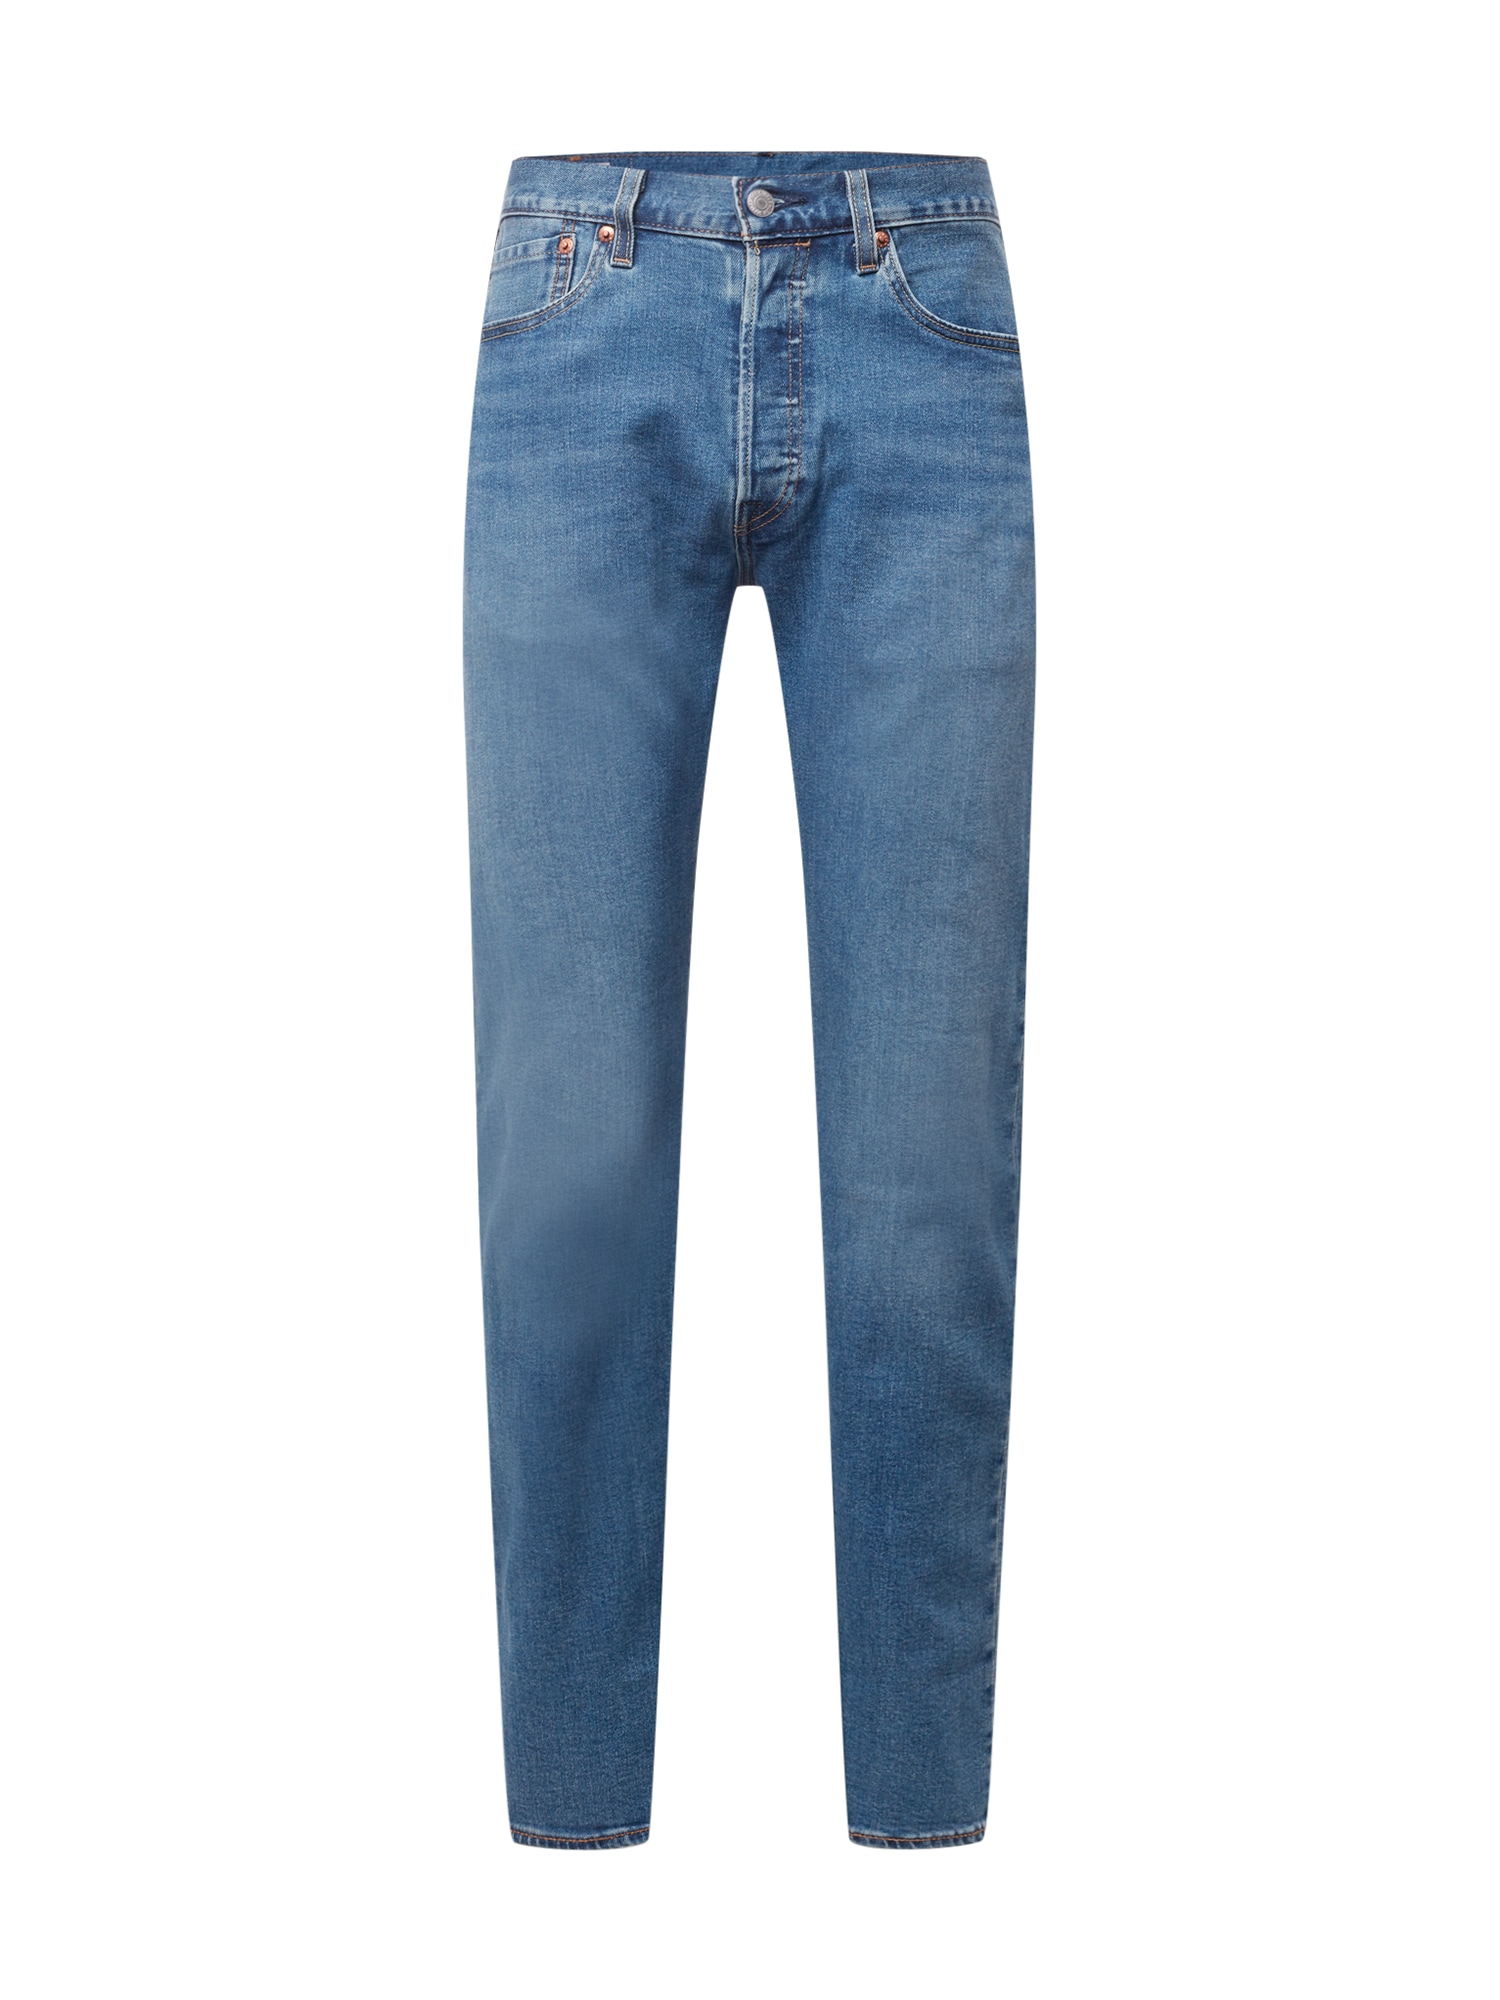 Jeans '501 LEVI'S ORIGINAL' von Levis